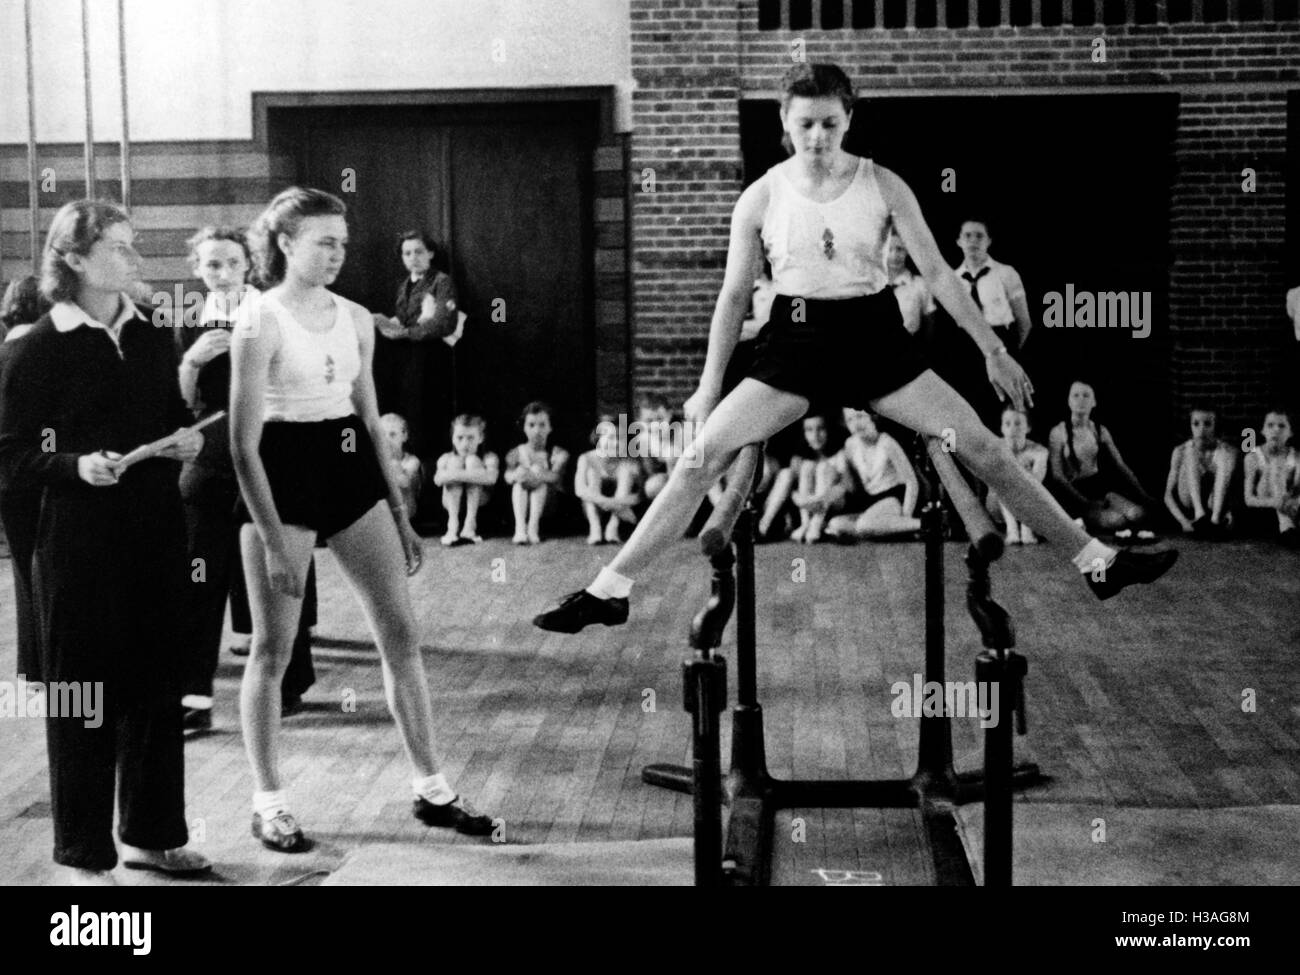 Members of the BDM-Werk Glaube und Schoenheit (BDM-Work, Faith and Beauty Society) doing gymnastics, Berlin 1940 Stock Photo